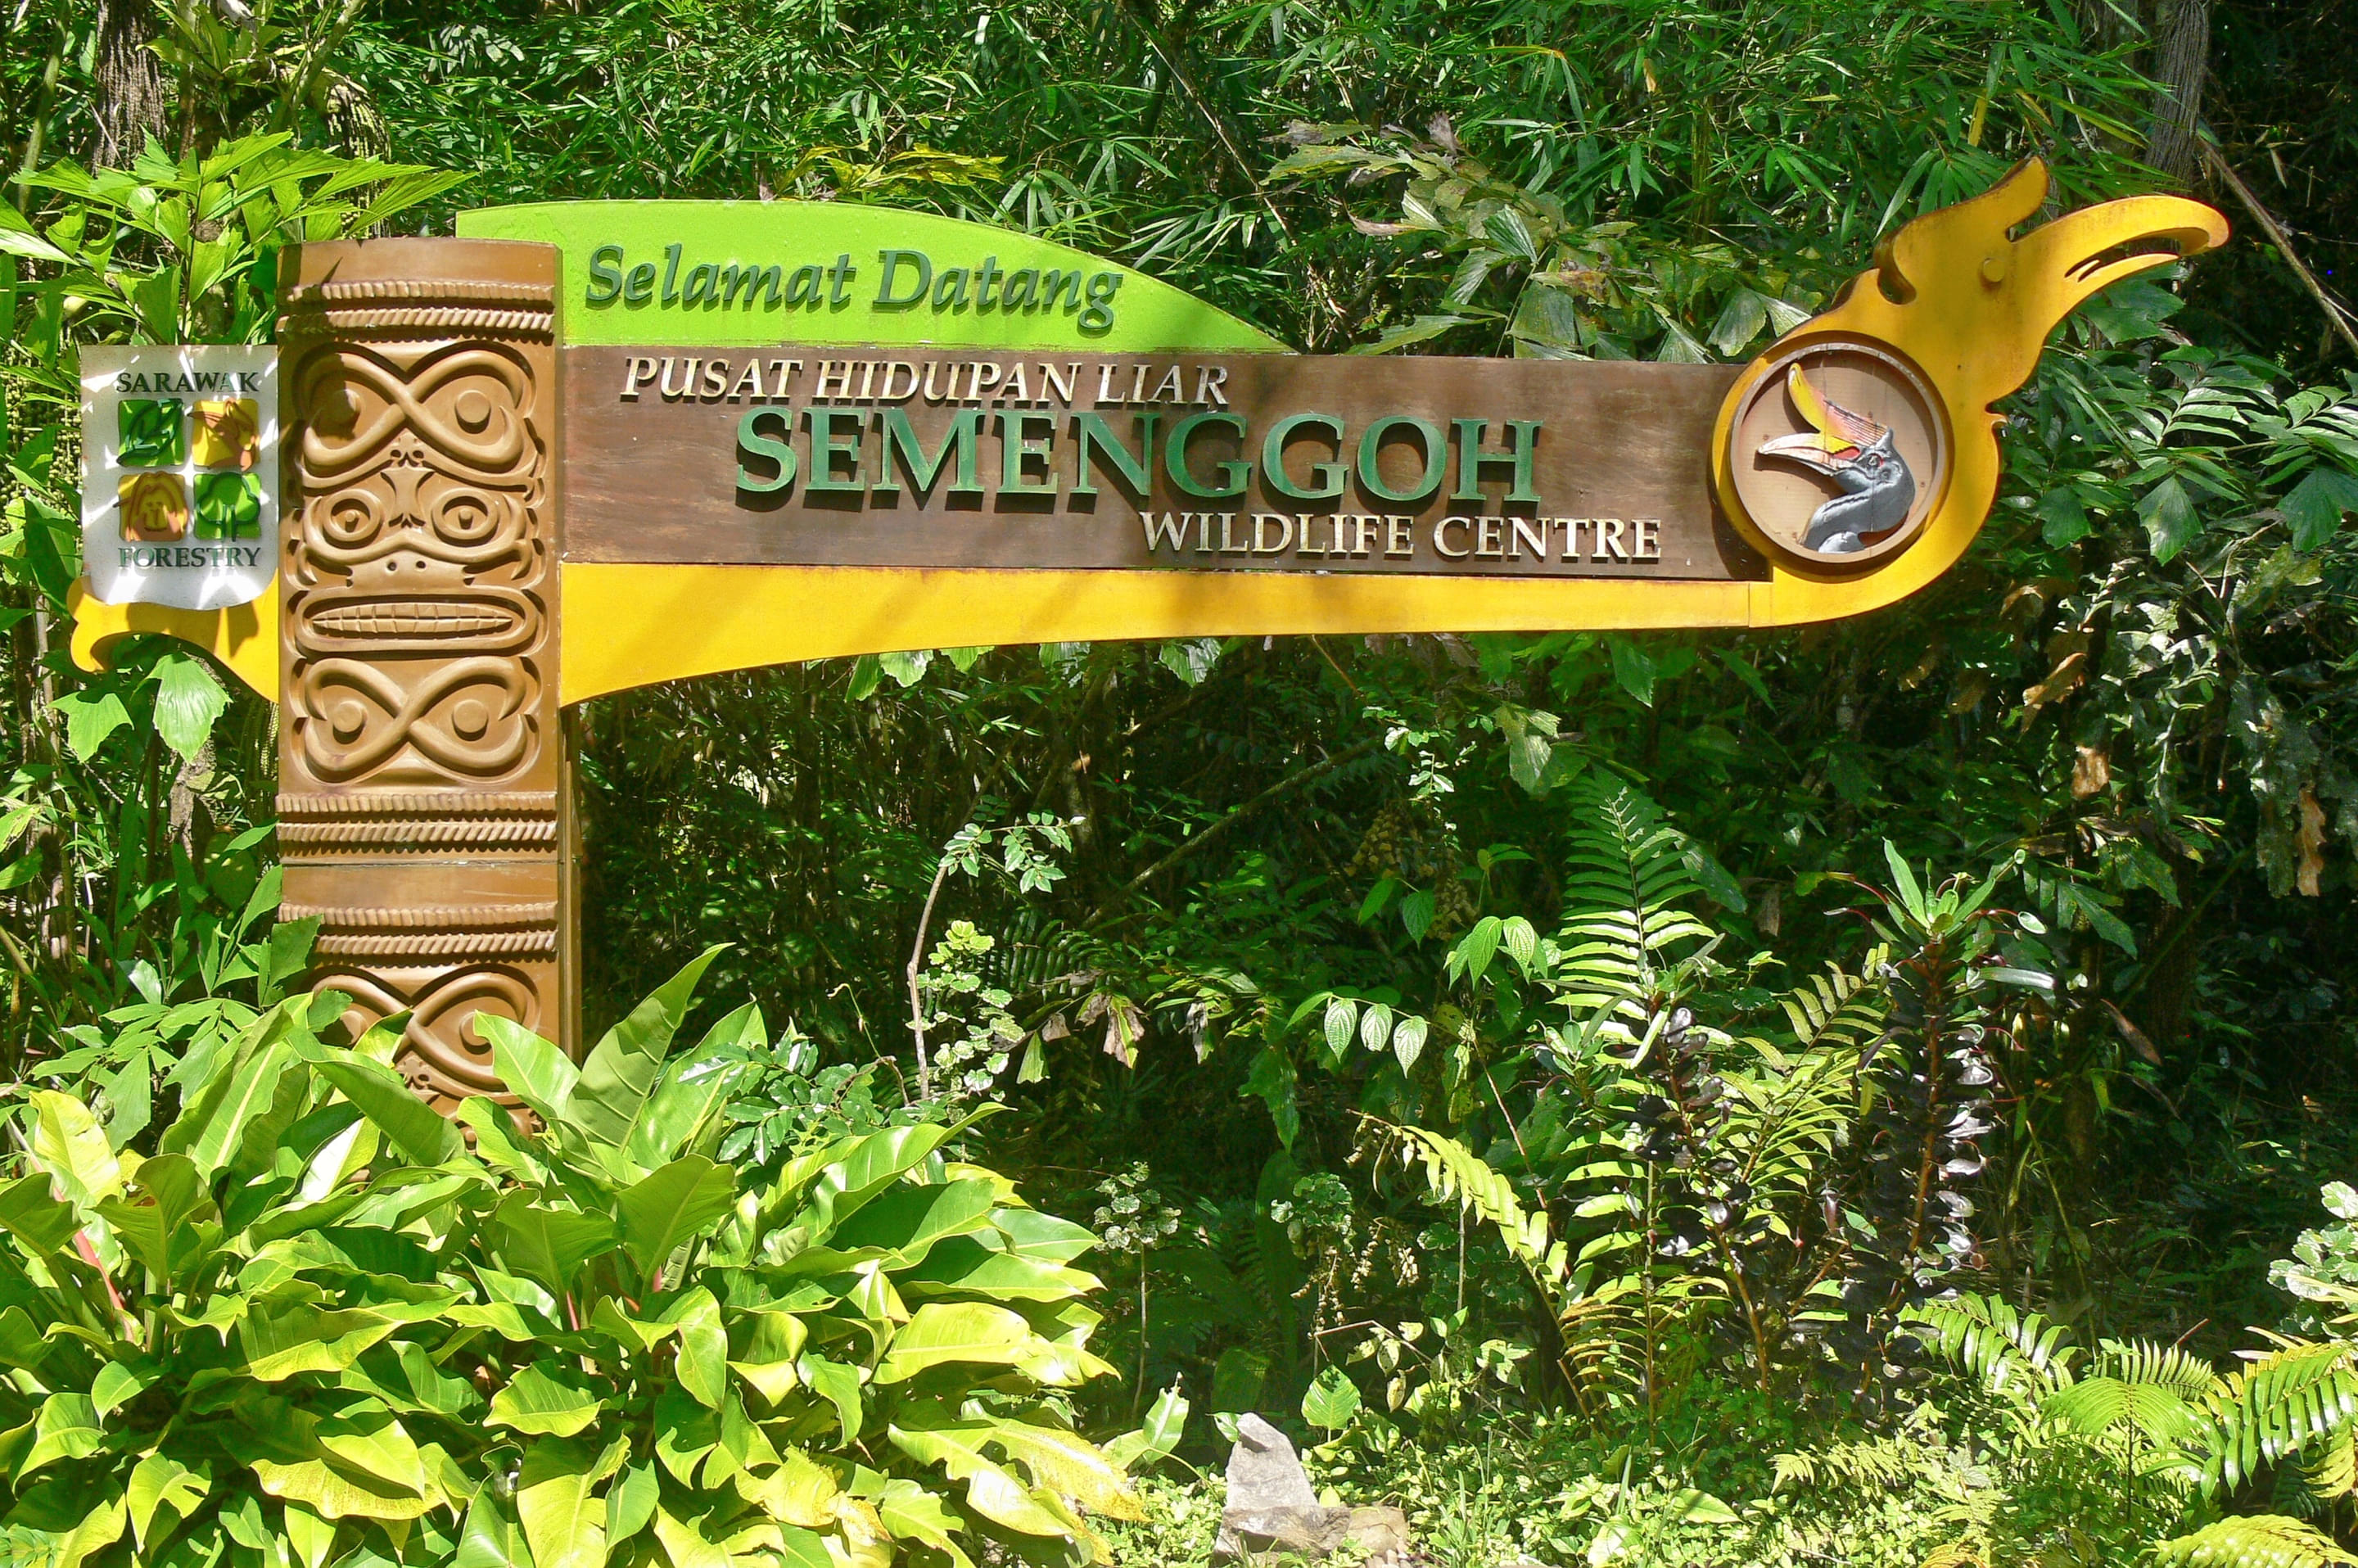 Semenggoh Wildlife Rehabilitation Centre Overview